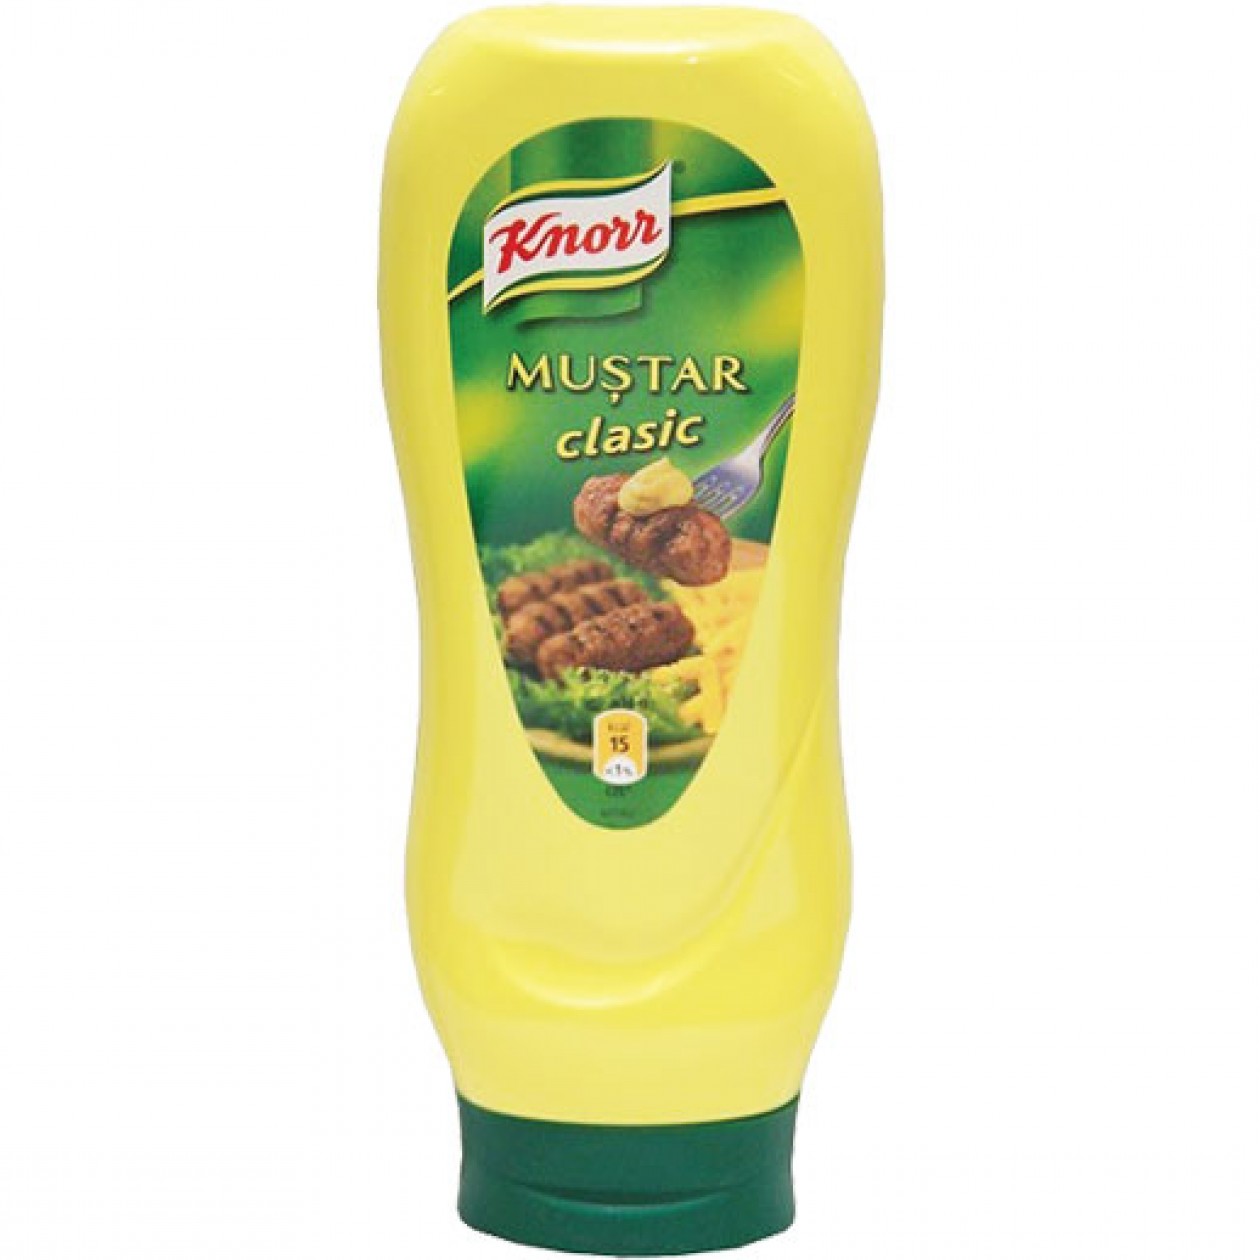 Knorr Mustard Classic 6x500g Plastic